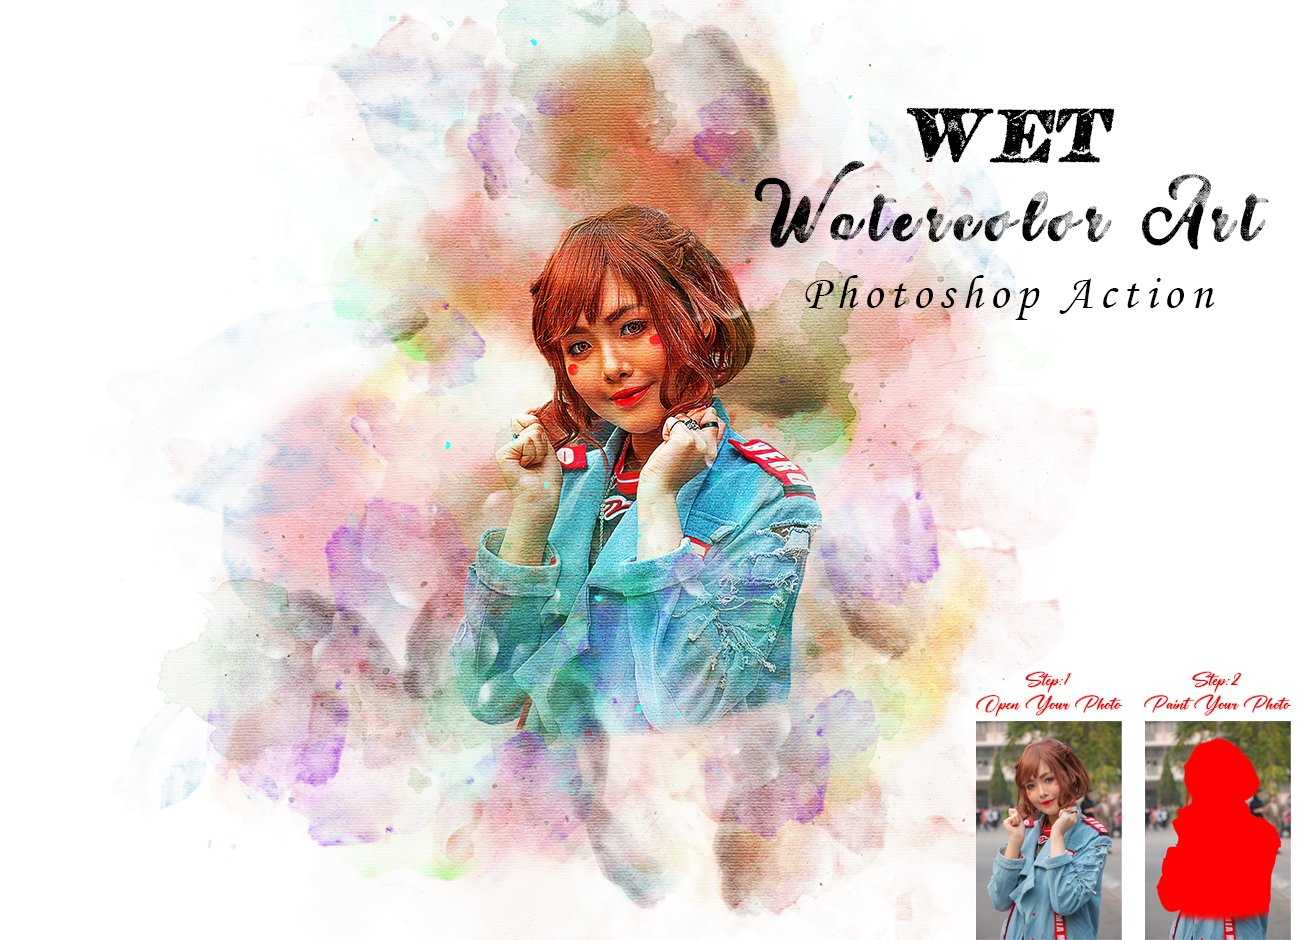 Wet watercolor Art Photoshop Actioncover image.